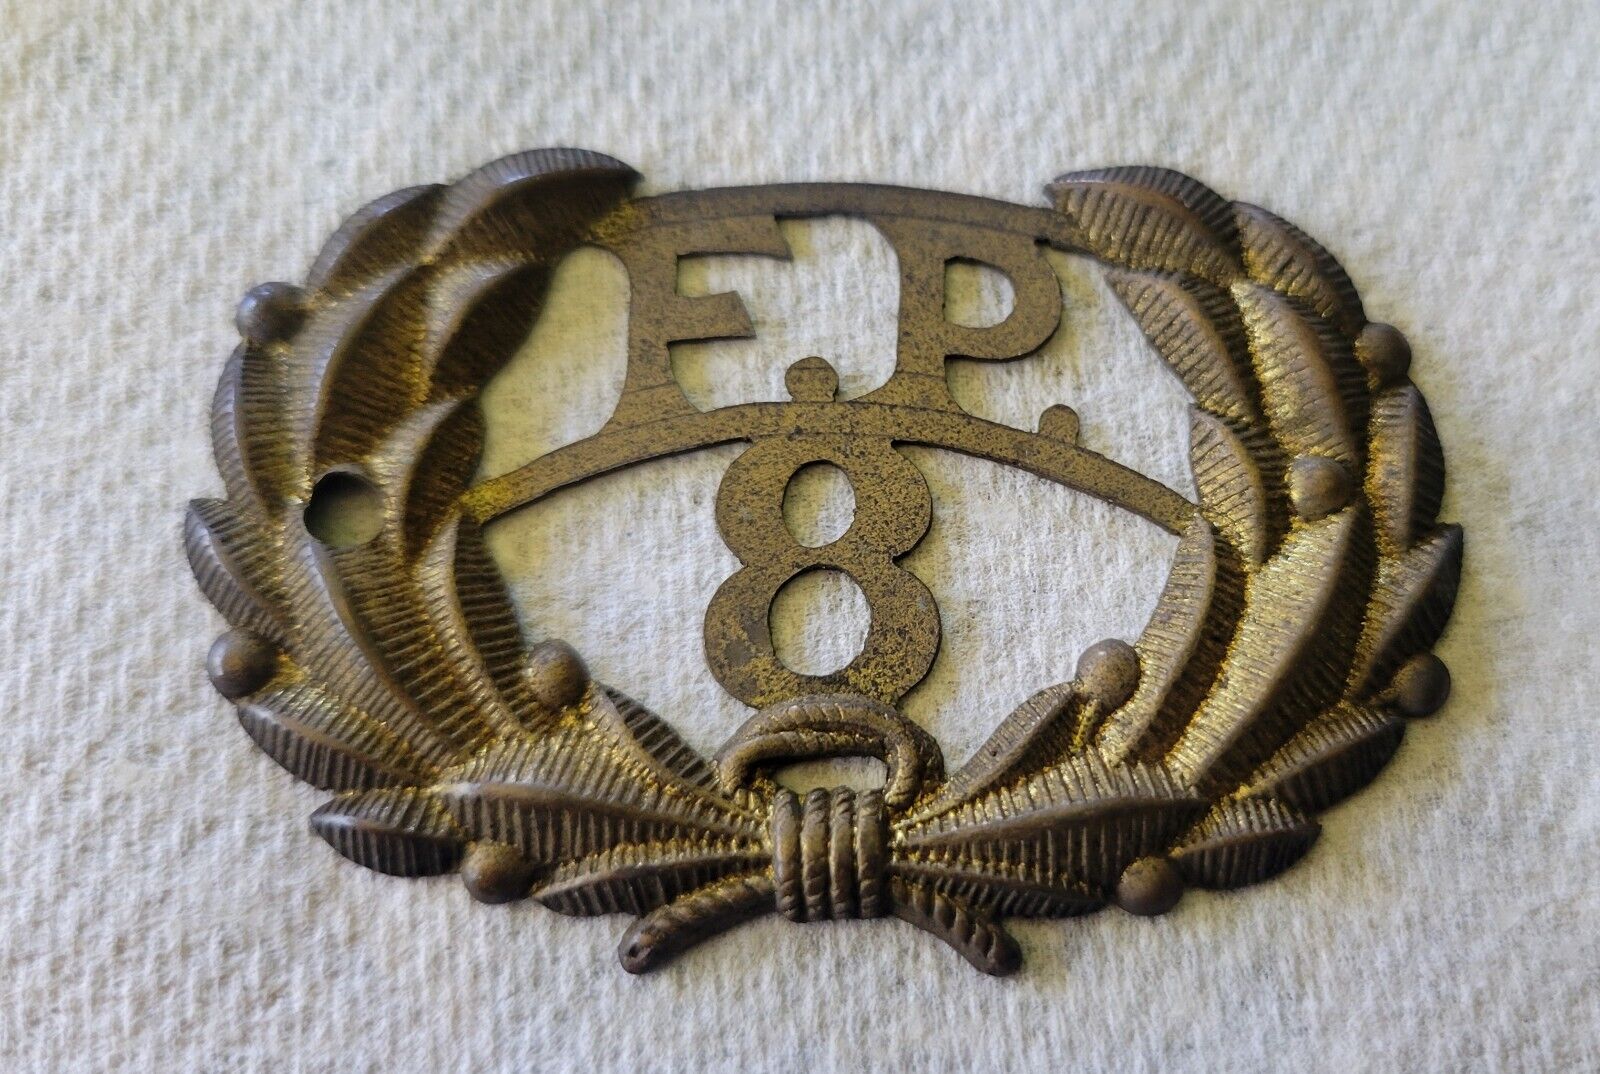 Rare Antique FD Fire Protection Dept Wreath Brigade Hat Badge Pin 1800s Brass 